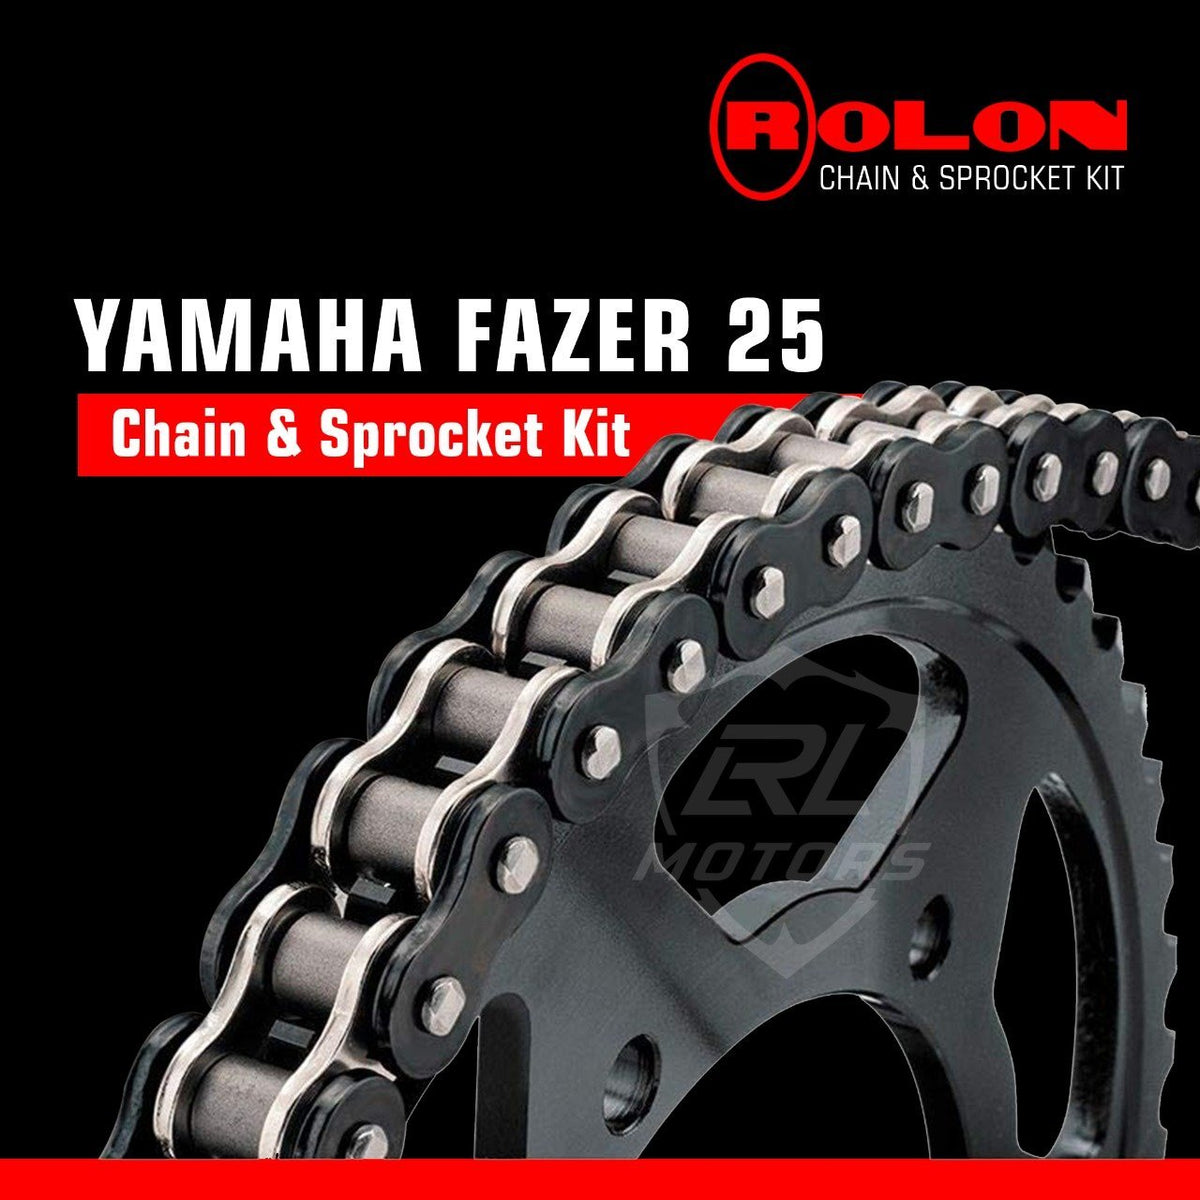 Yamaha Fazer 25 Rolon Chain & Sprocket Kit - LRL Motors